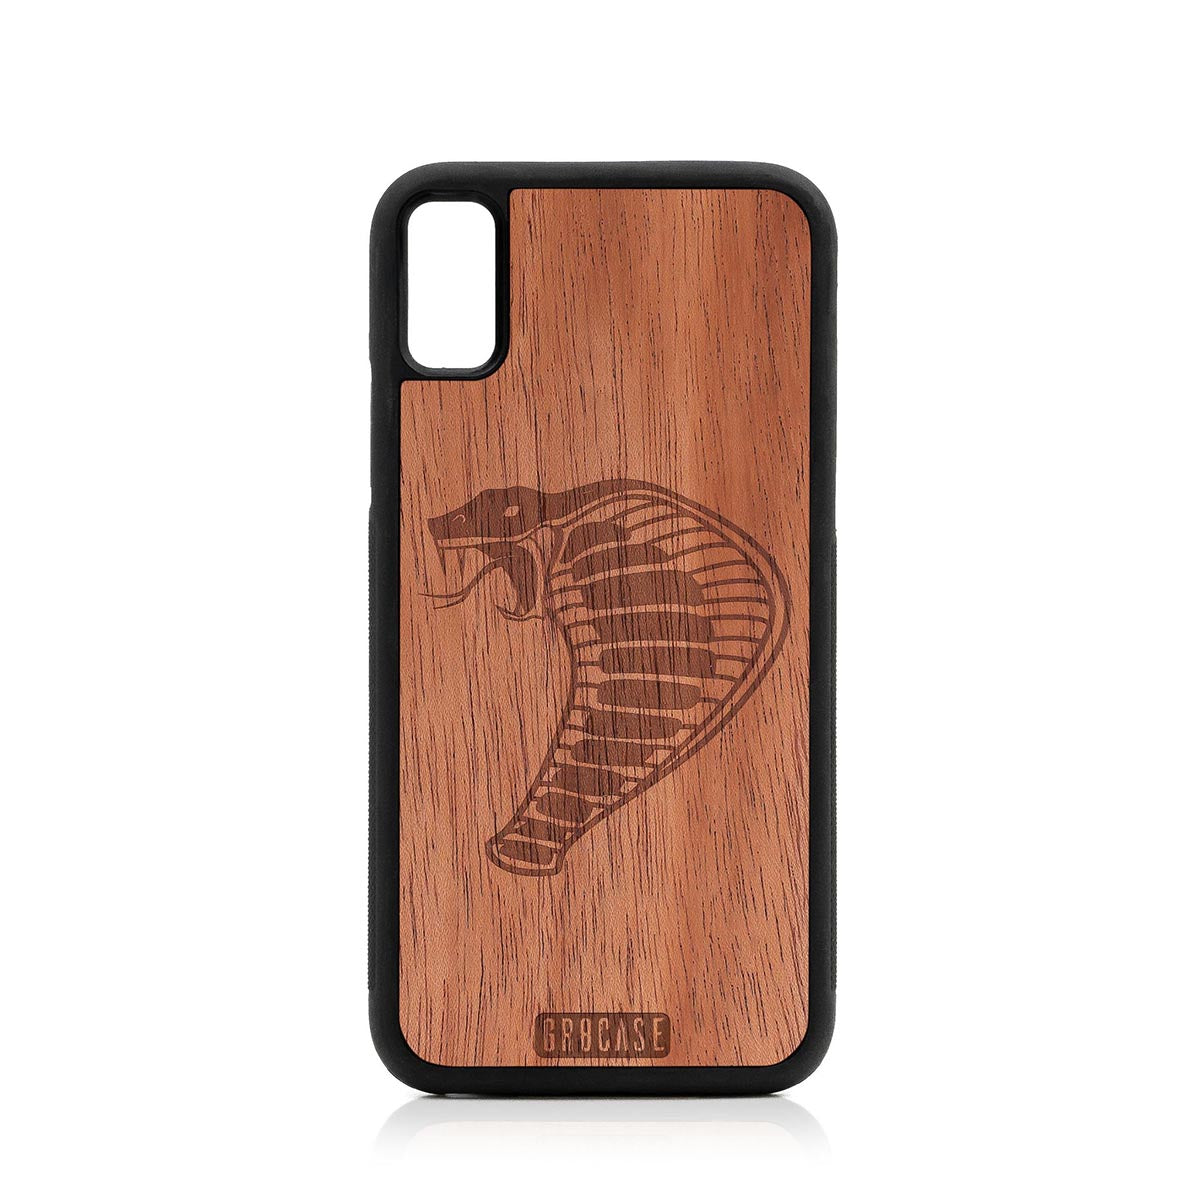 Cobra Design Wood Case For iPhone XR by GR8CASE